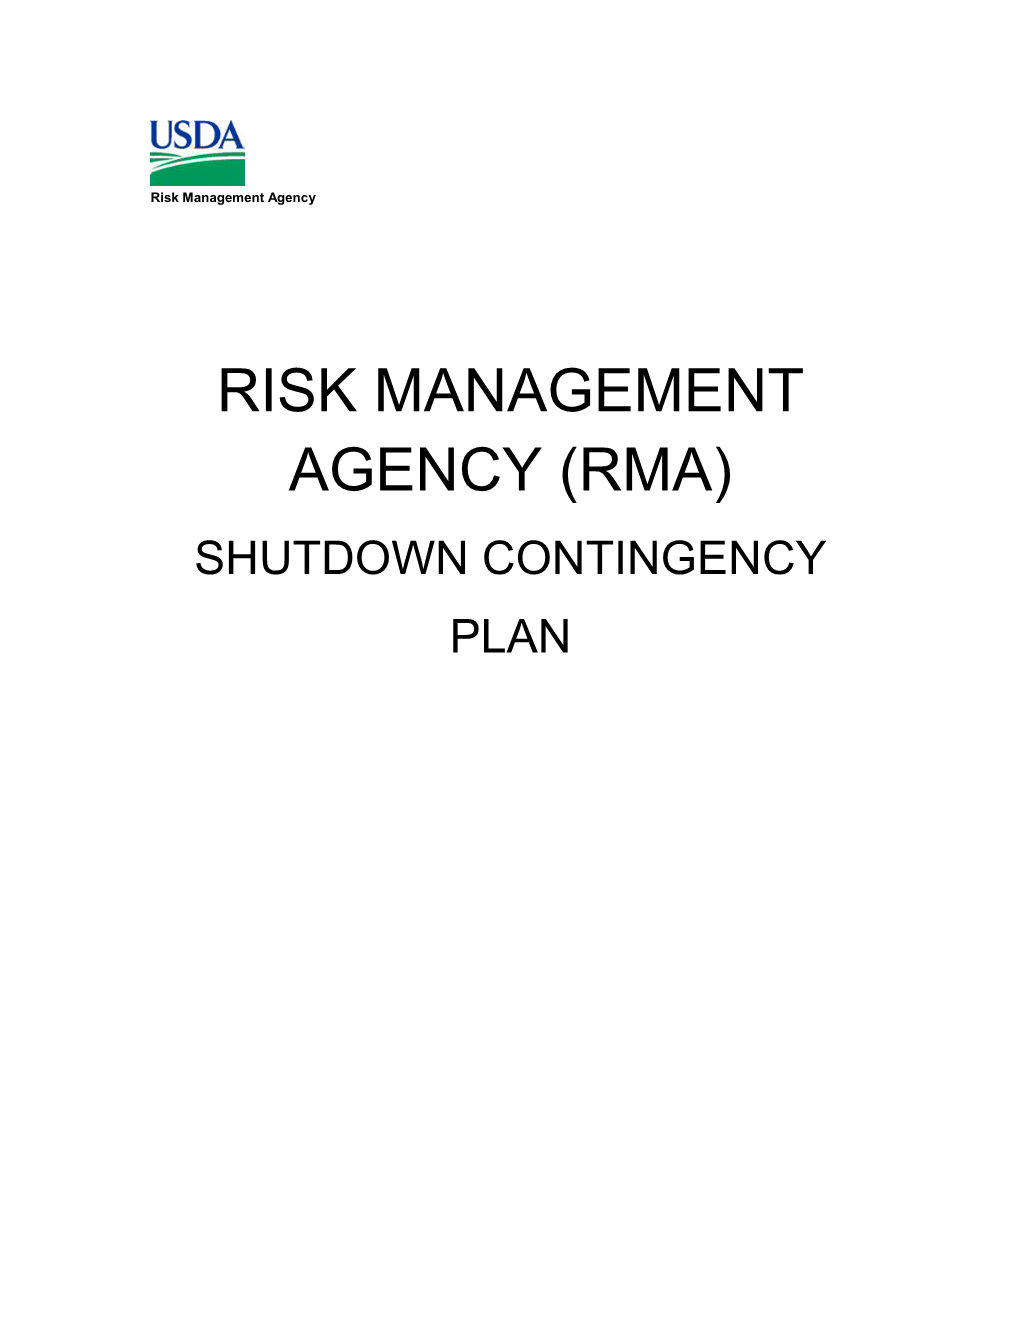 Risk Management Agency Shutdown Contingency Plan